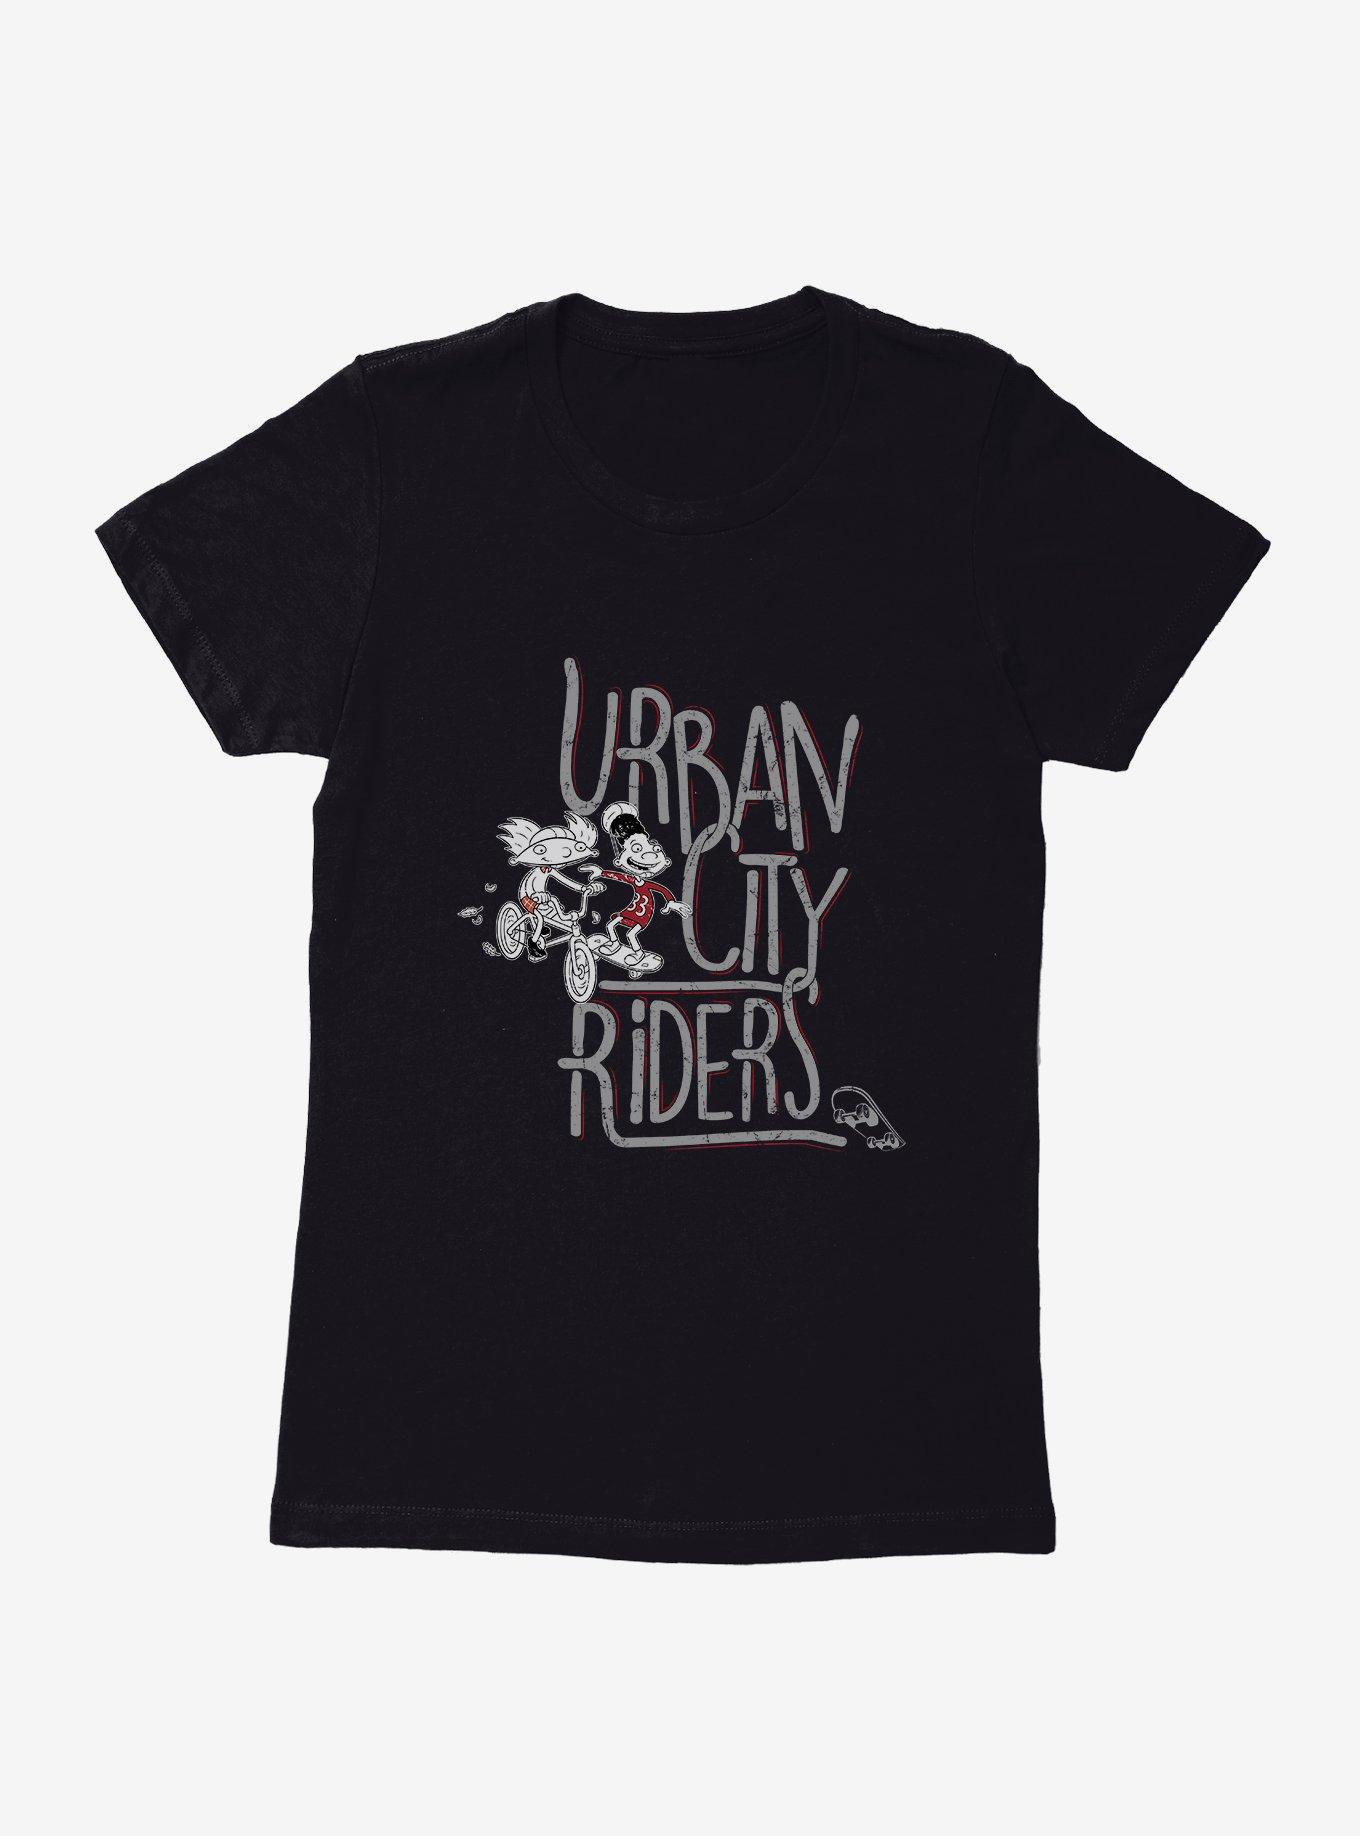 Hey Arnold! Urban City Riders Womens T-Shirt, BLACK, hi-res